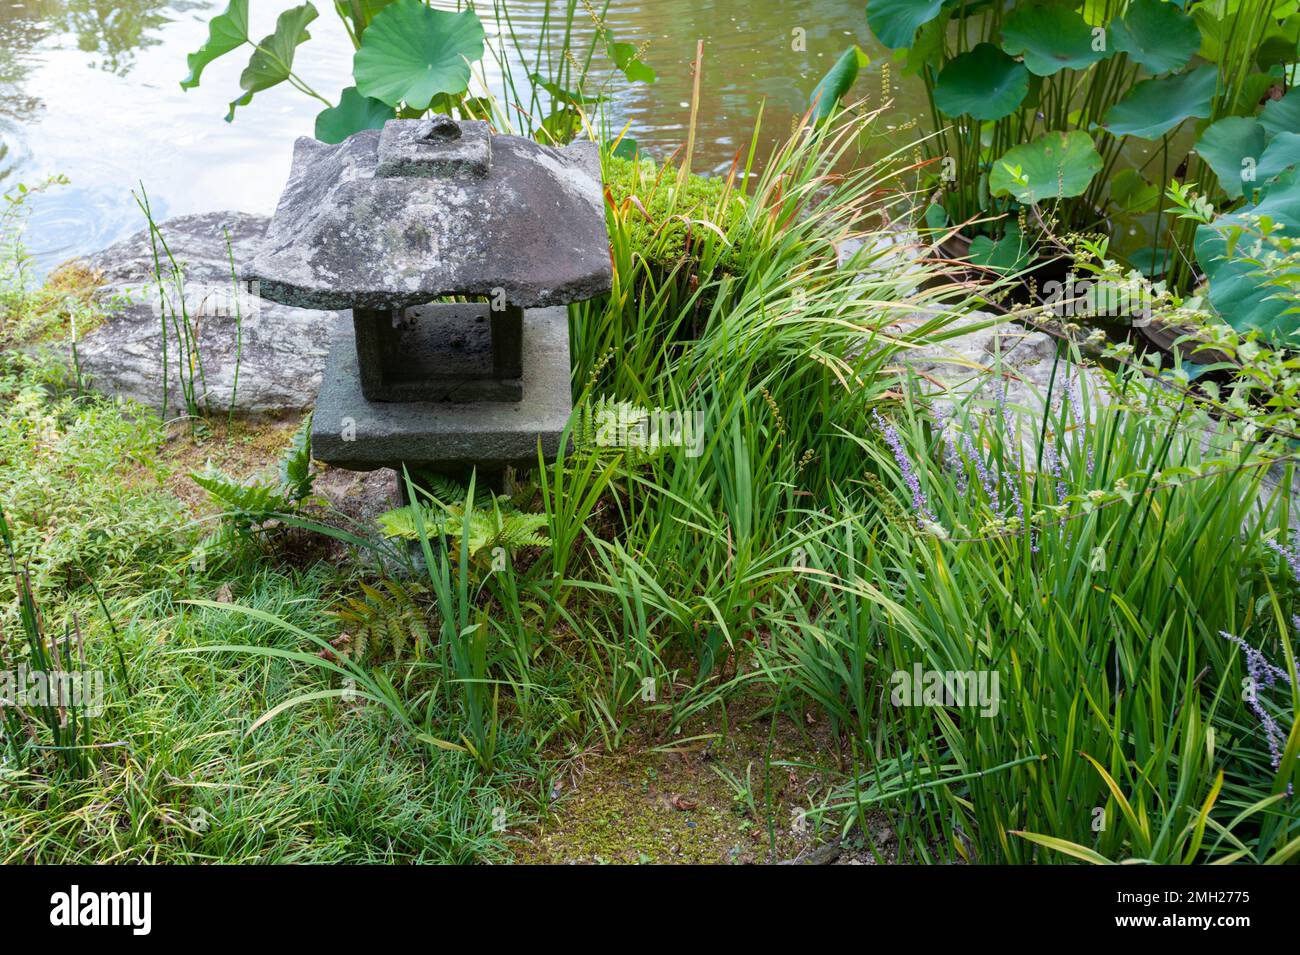 The Yoko-en pond garden at Taizo-in Temple, Myoshin-ji, Kyoto, Japan. Stock Photo